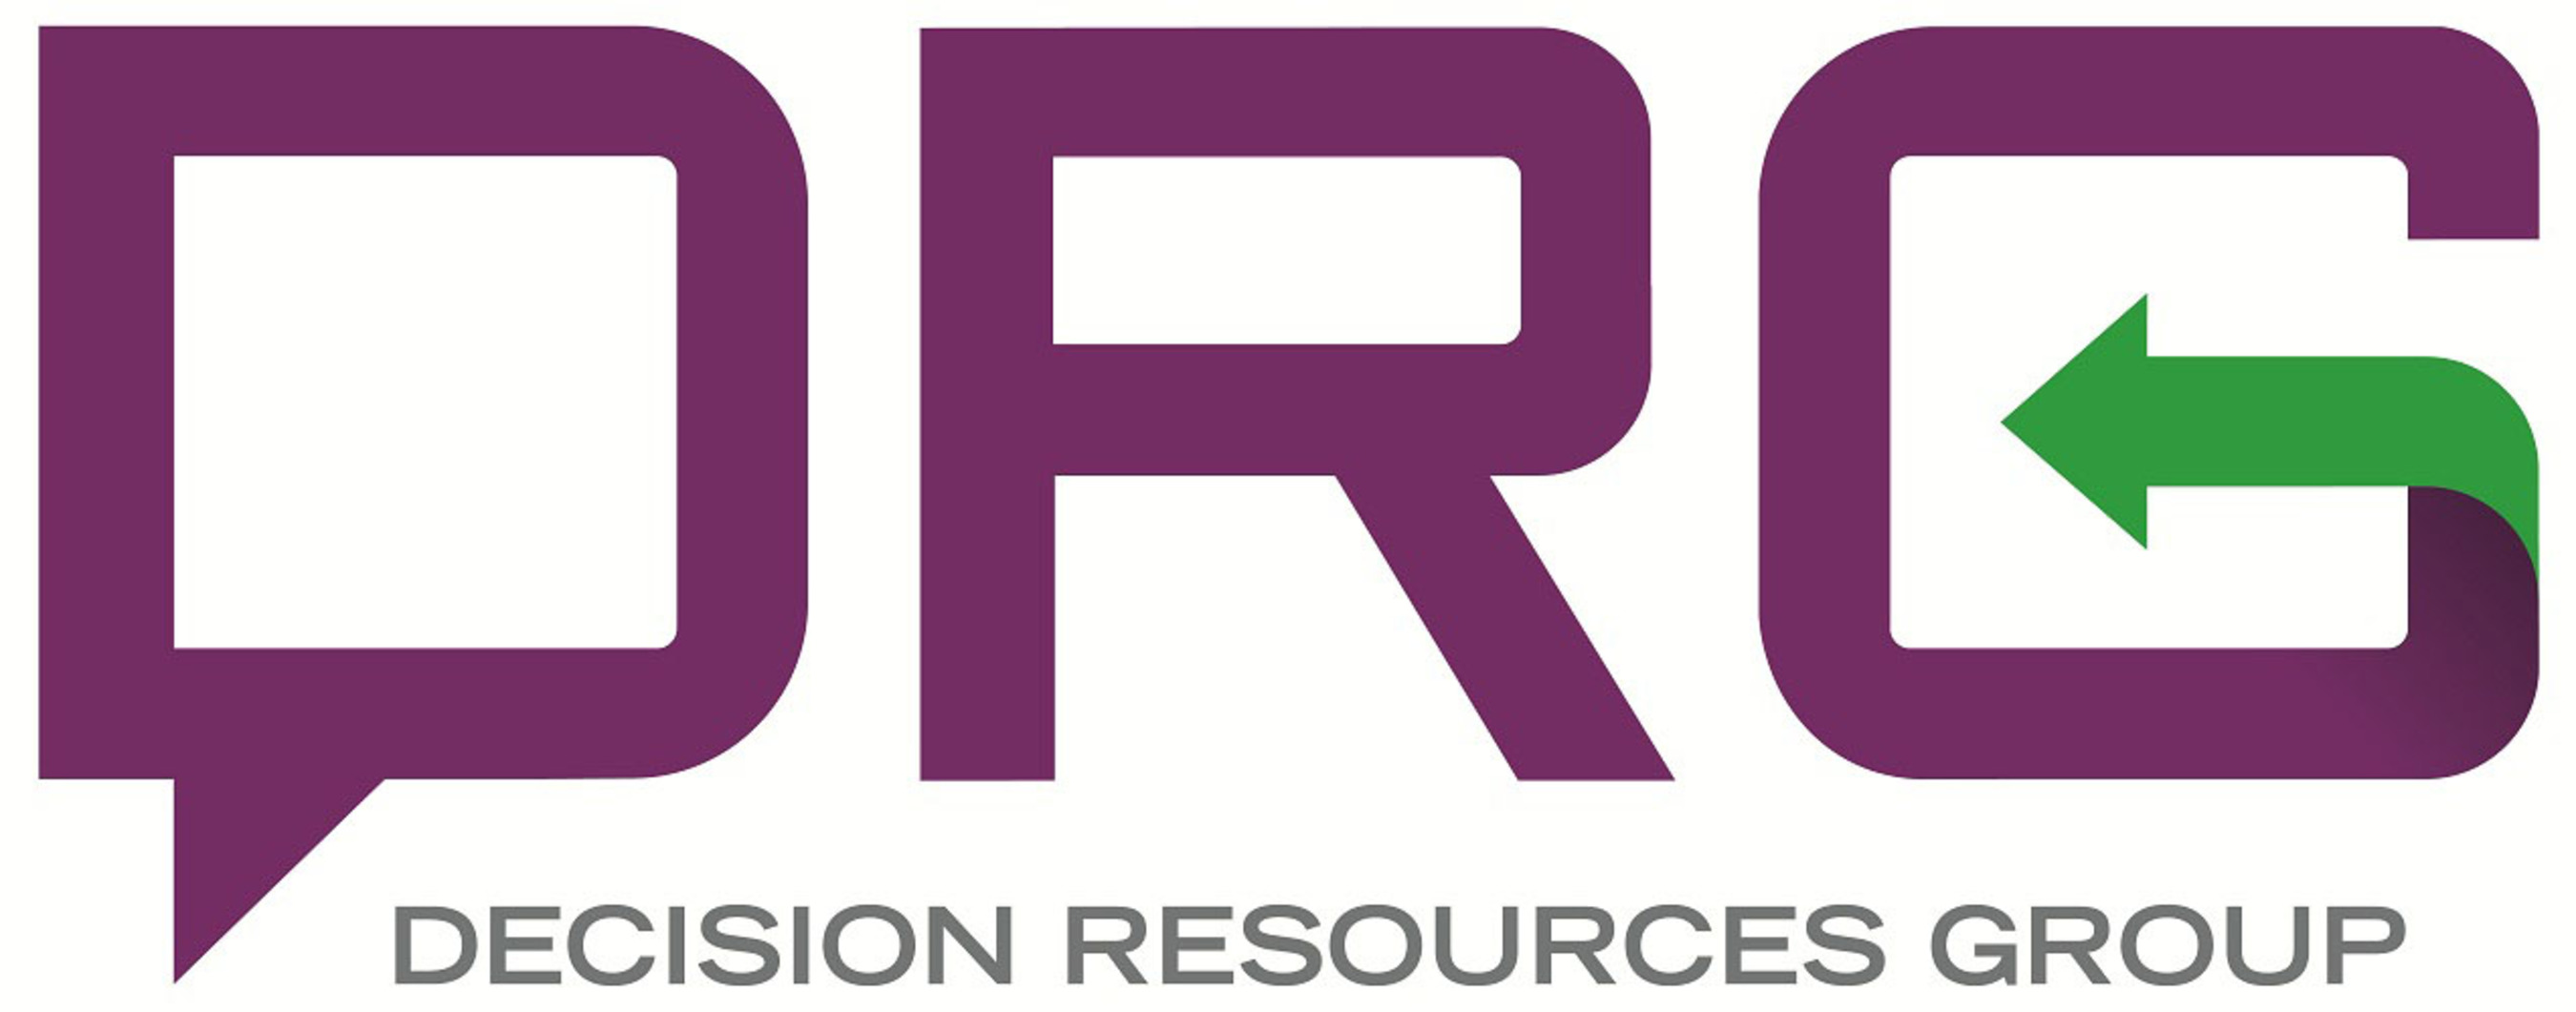 Decision Resources Group Logo